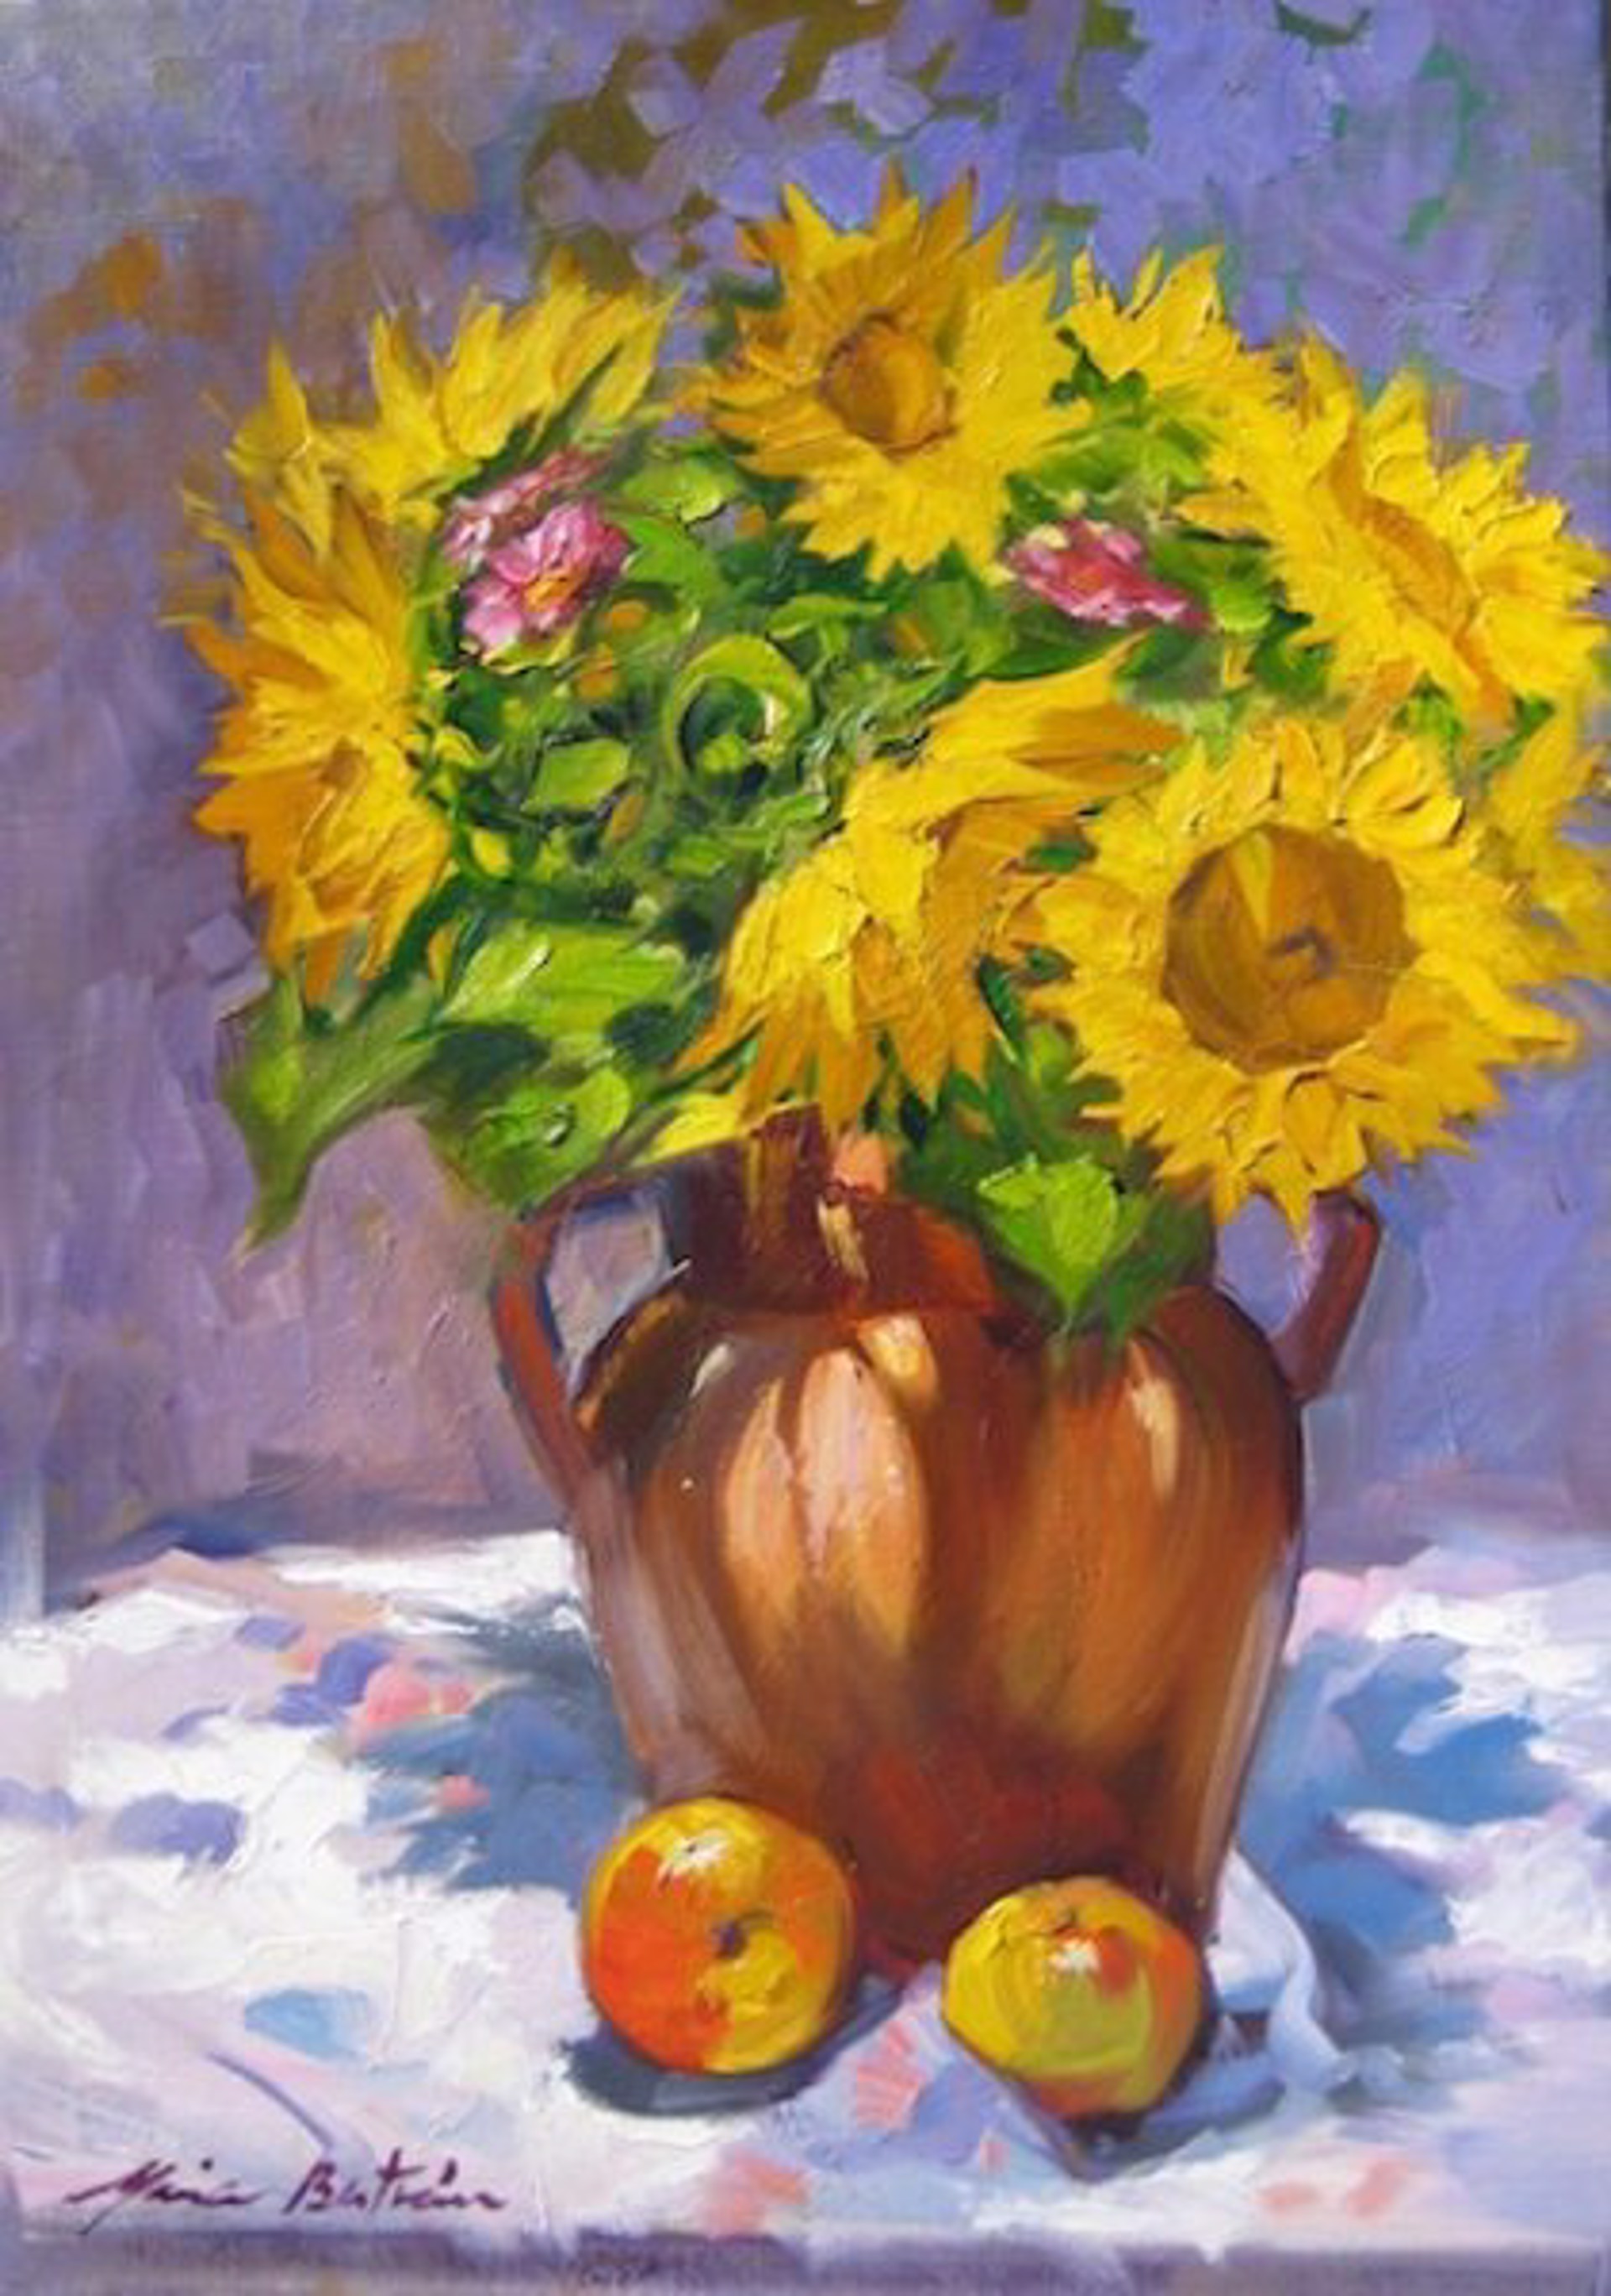 Maria Bertran: Sunflowers And Purples by Maria Bertrán